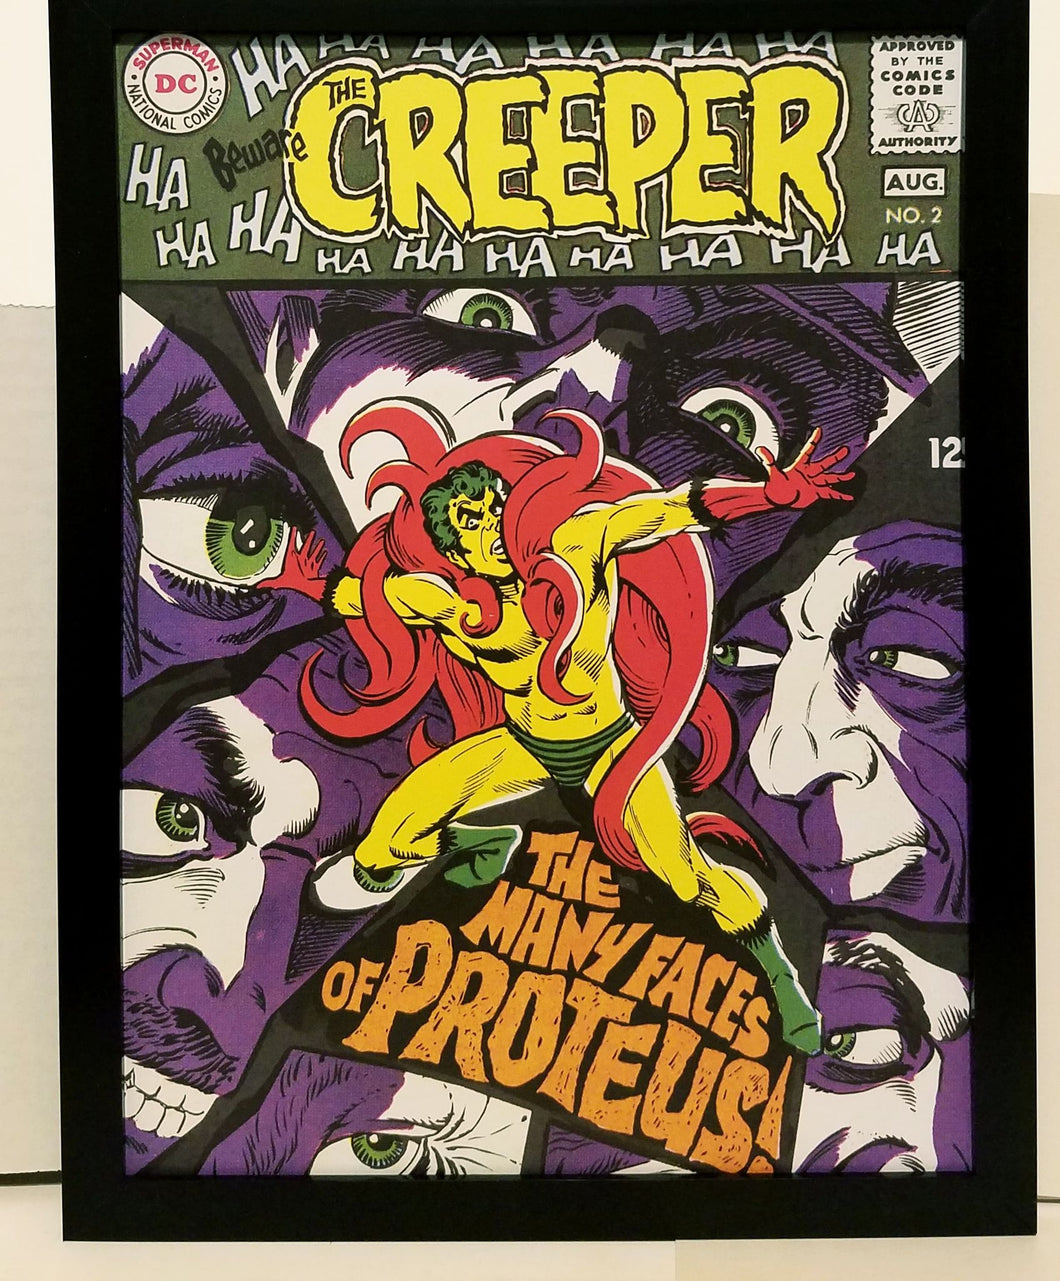 Beware the Creeper #2 by Steve Ditko 9x12 FRAMED DC Comics Art Print Poster